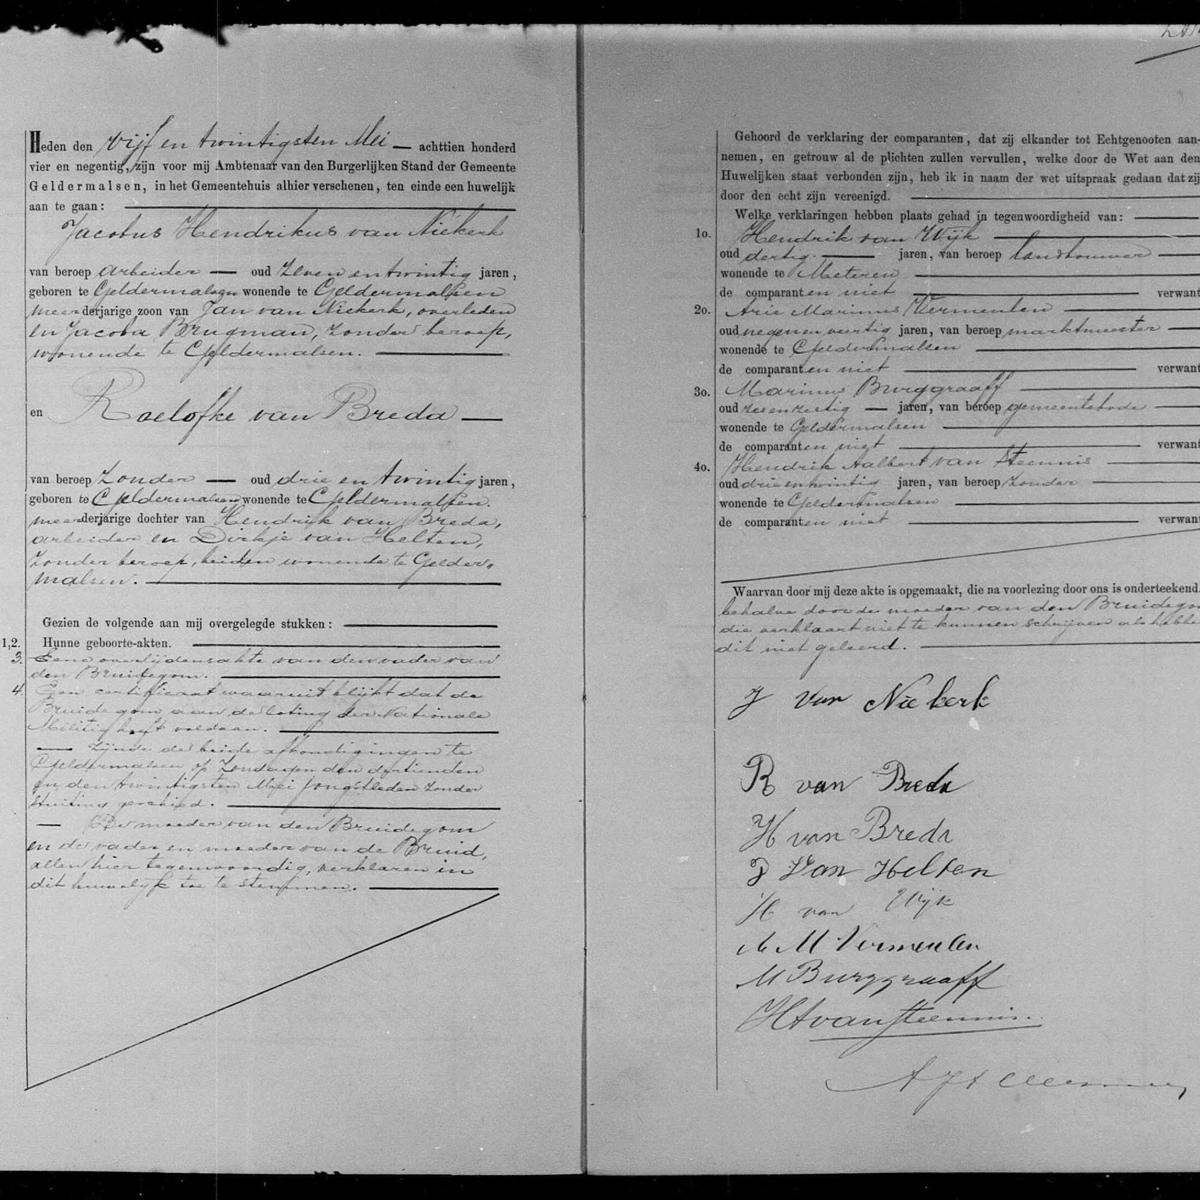 Civil registry of marriages, Geldermalsen, 1894, record 10